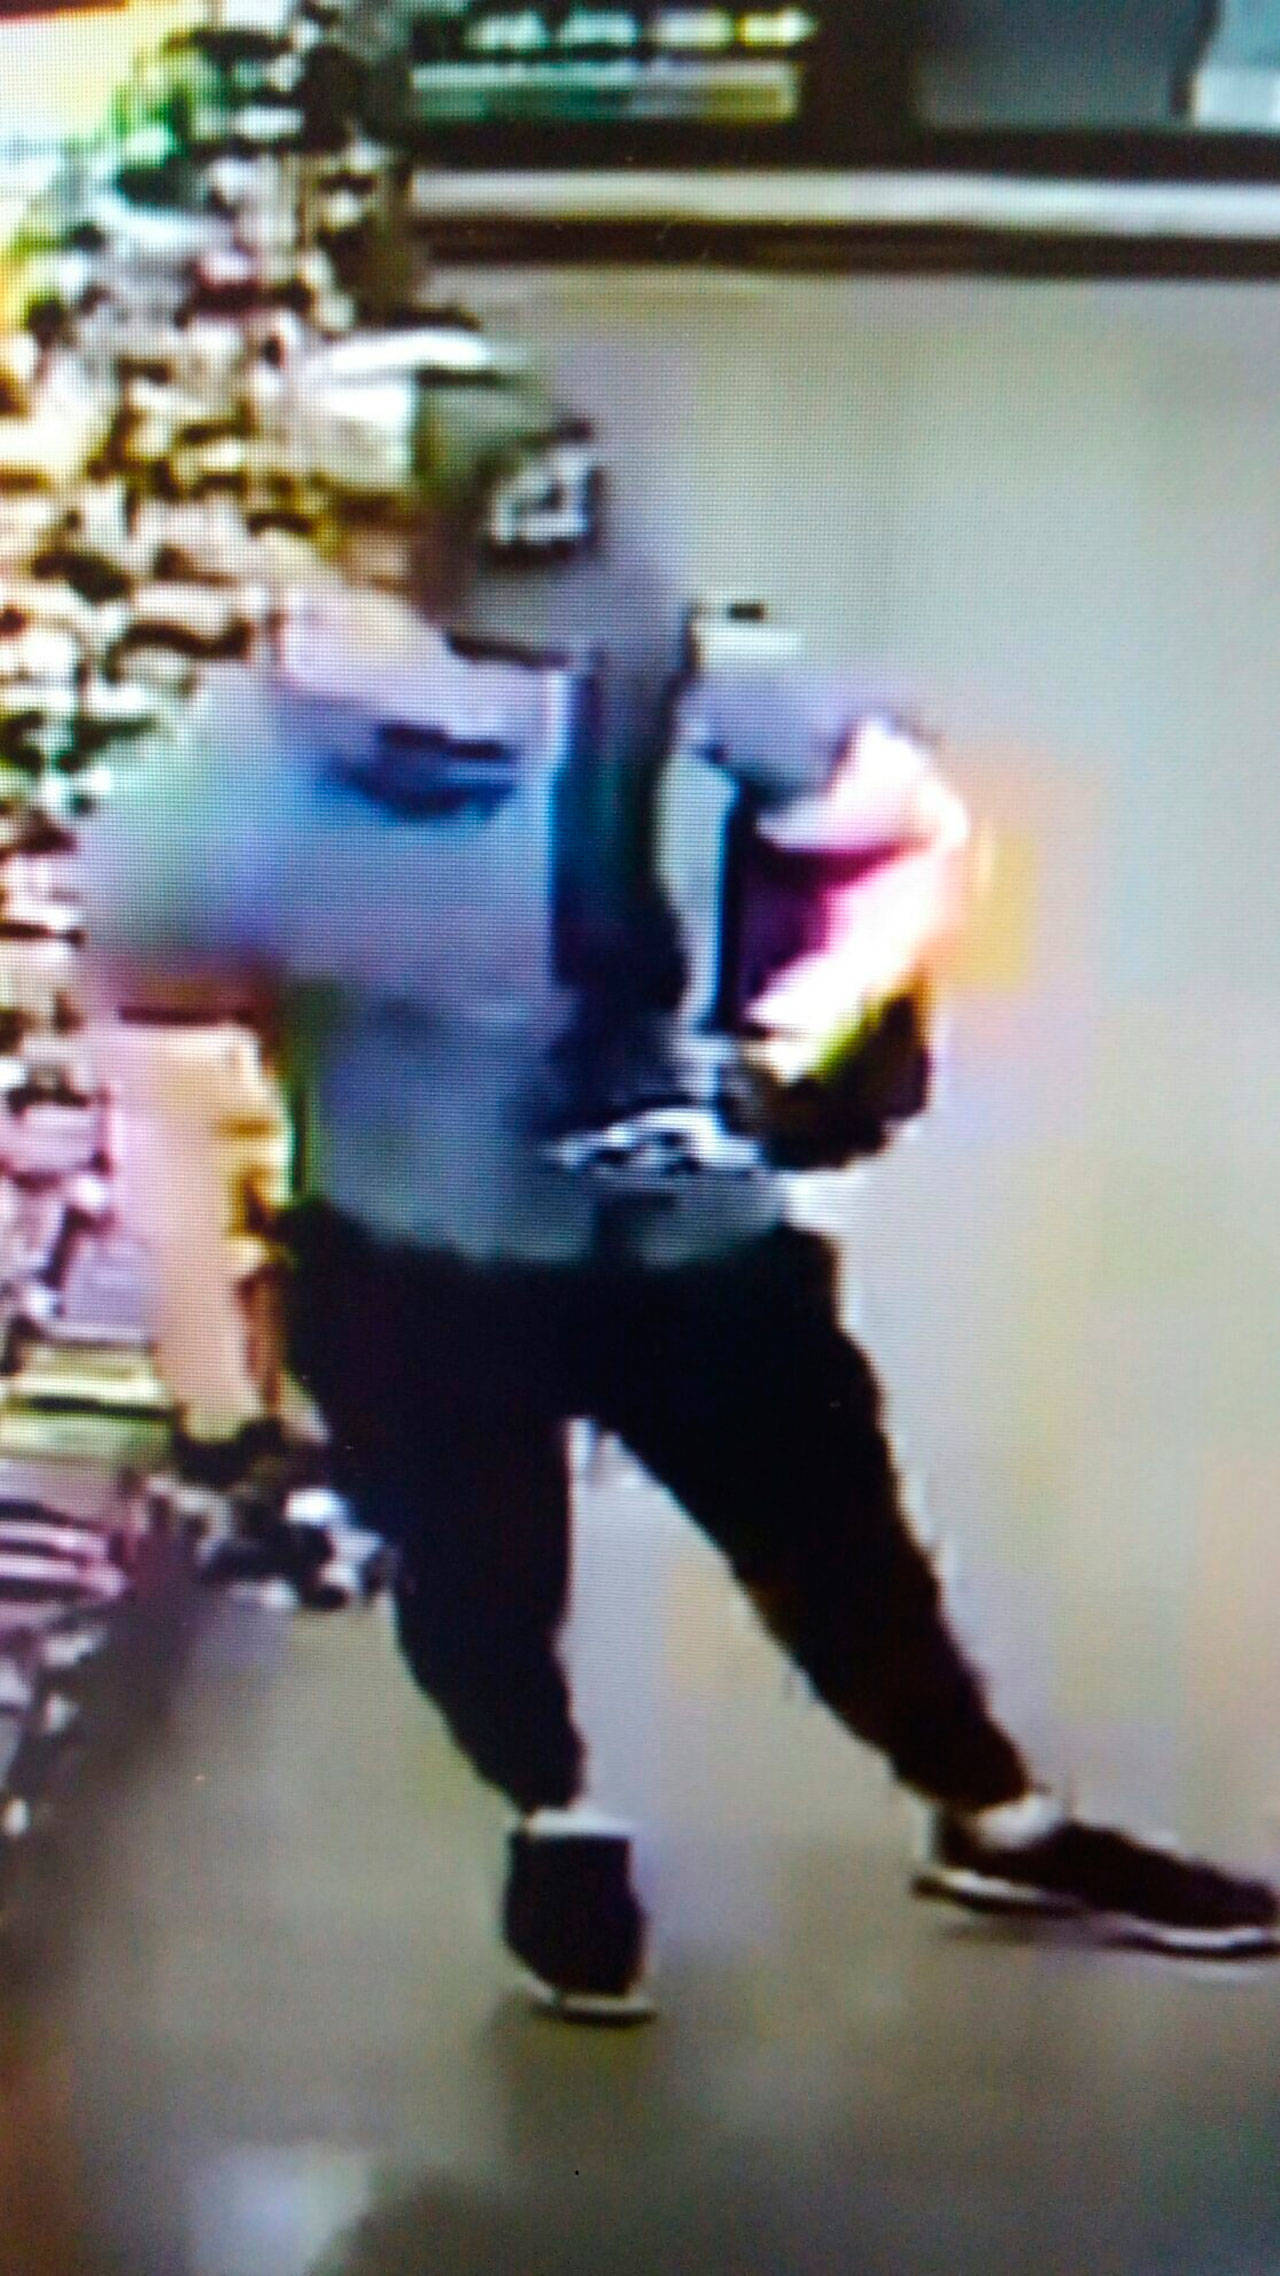 UPDATE | Bainbridge police release security camera footage of robbery suspect